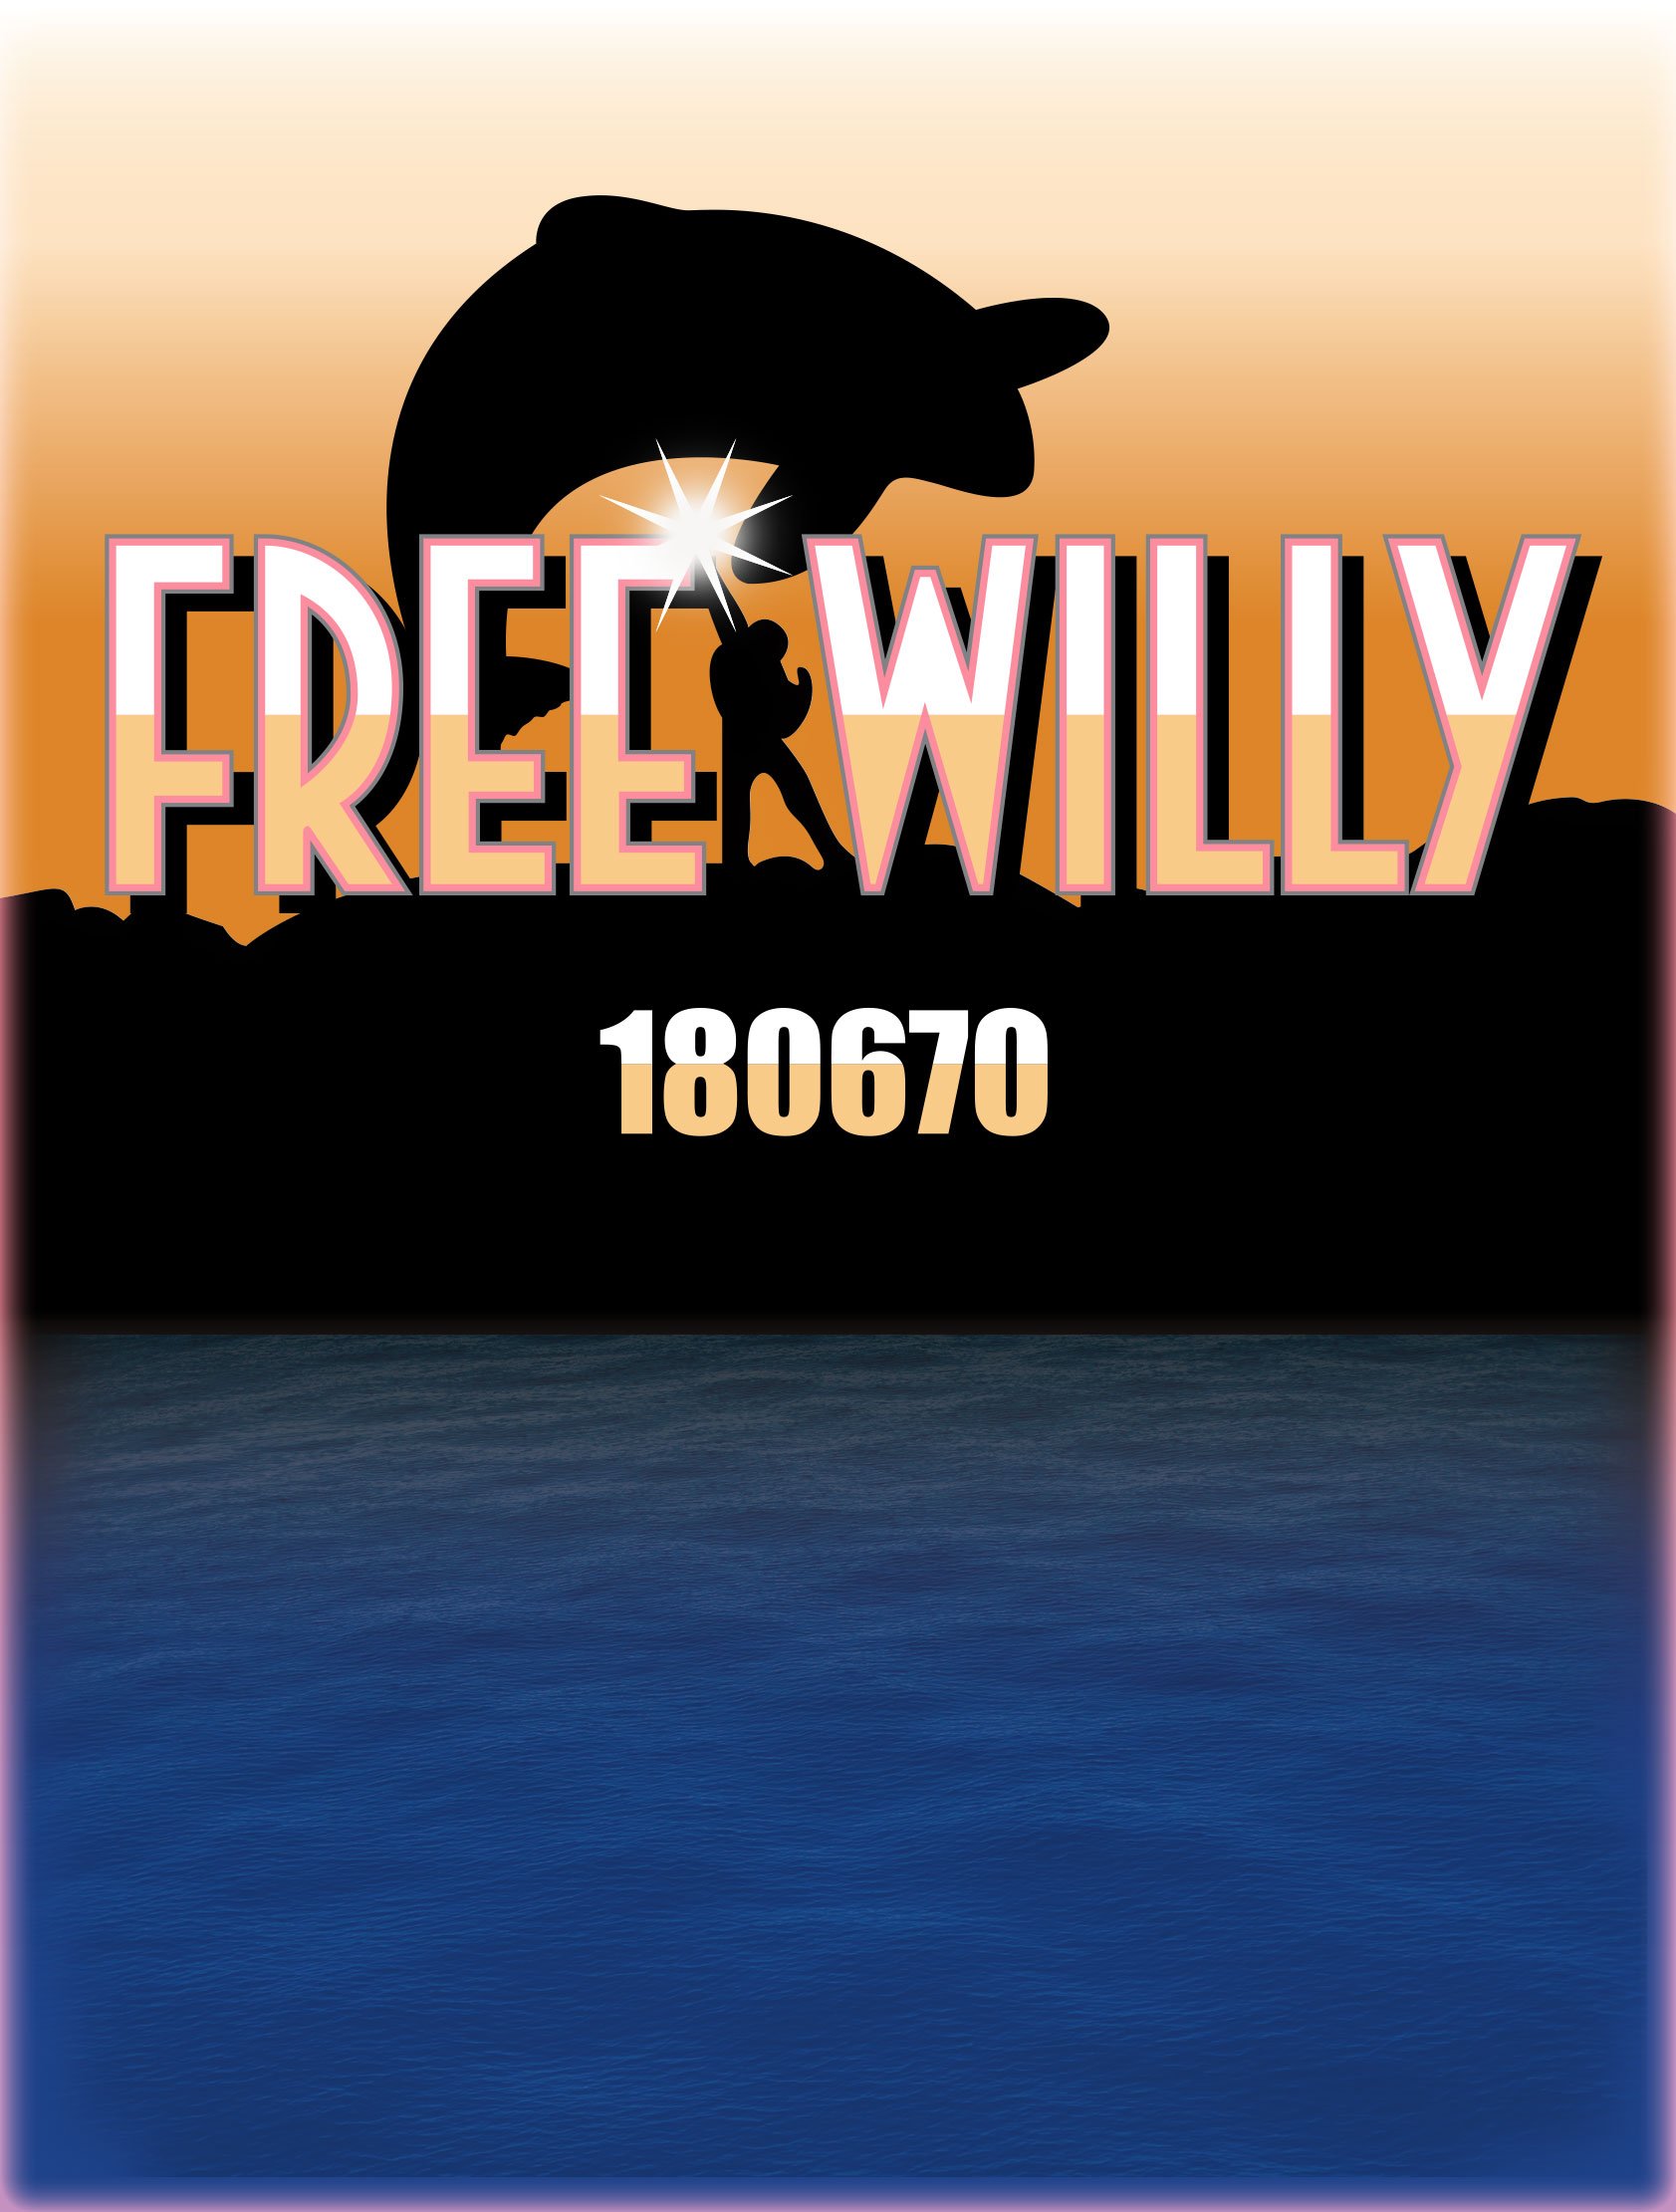 Free Willy Logo2 1